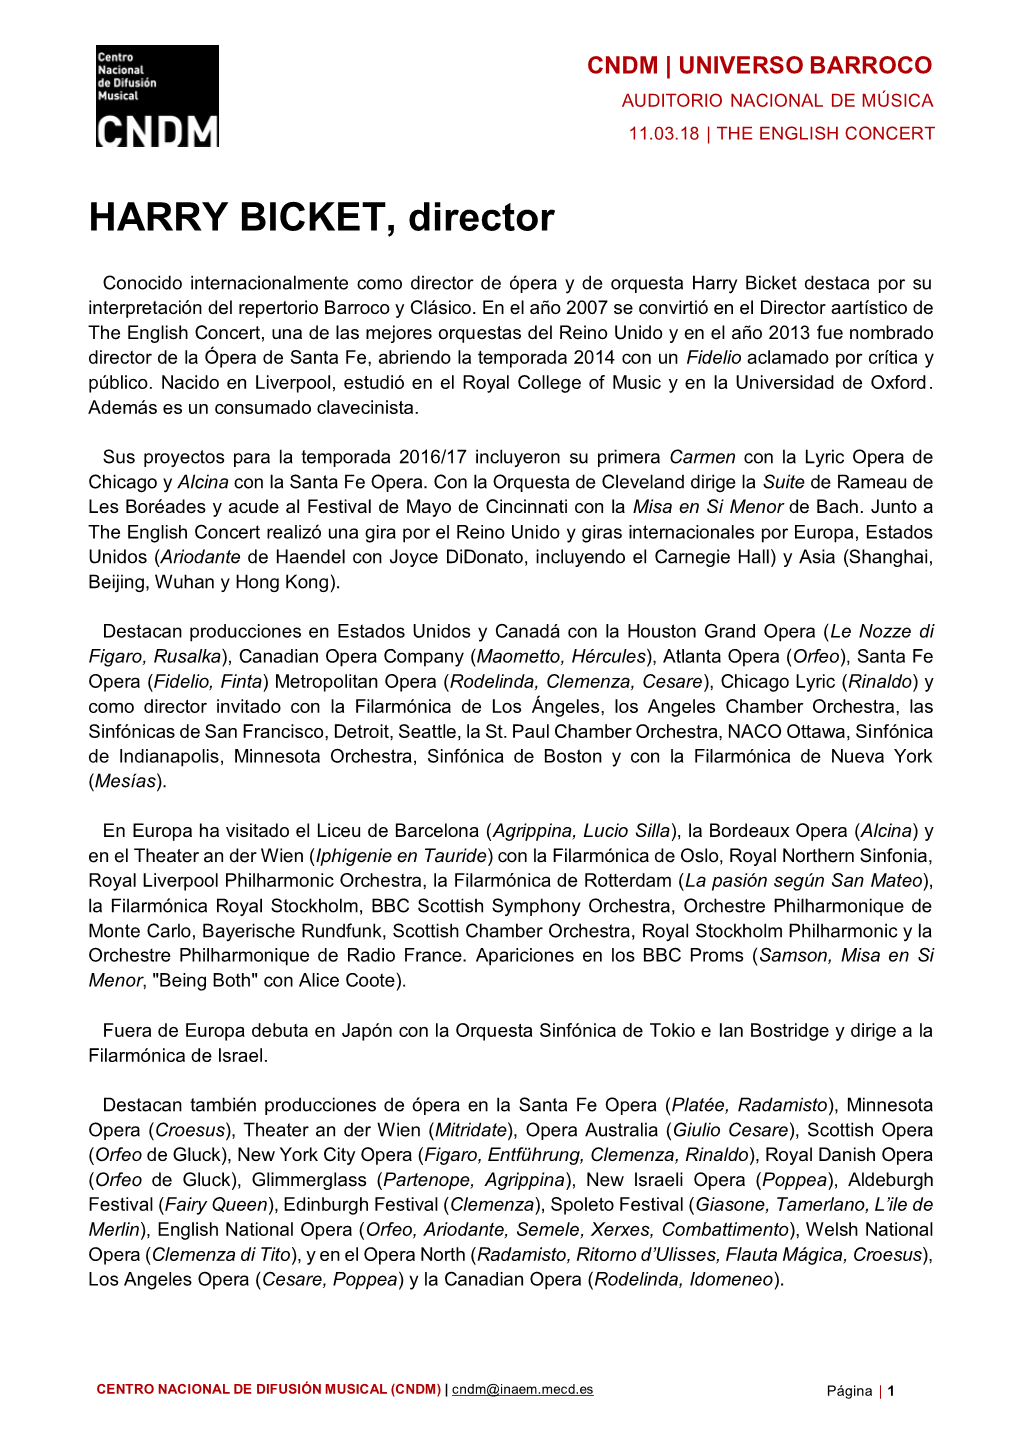 HARRY BICKET, Director